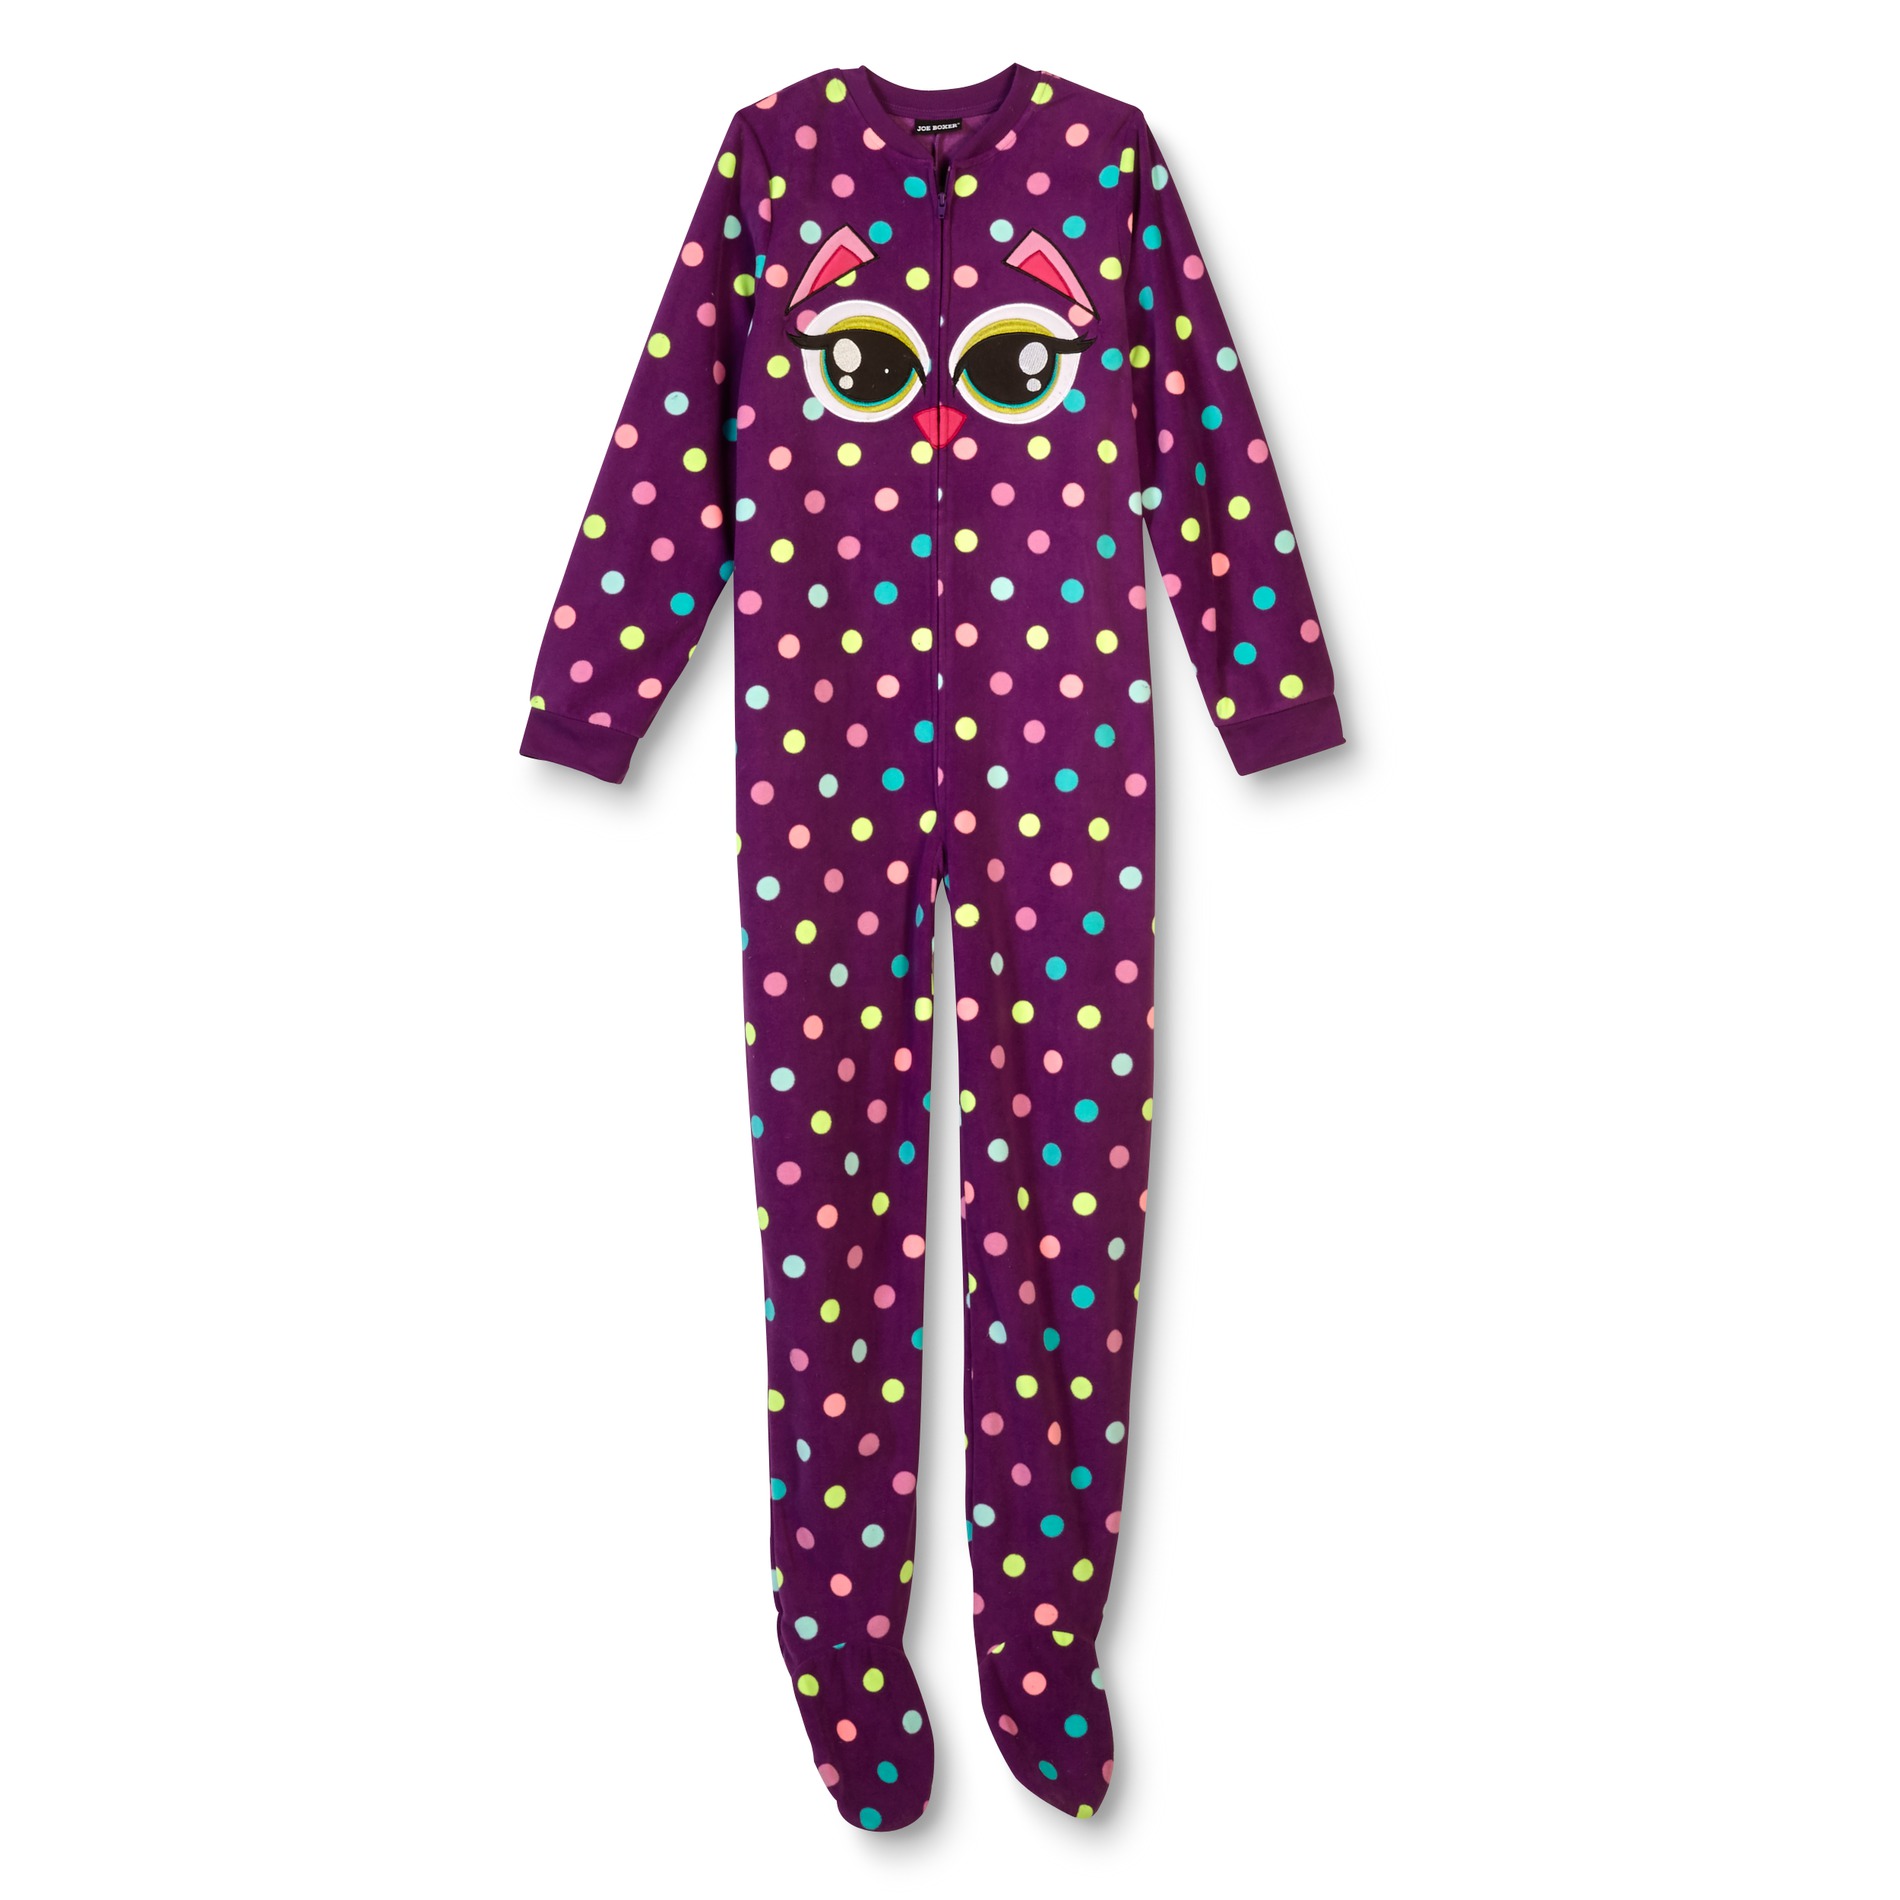 Joe Boxer Girl's Fleece Footed Pajamas - Dots